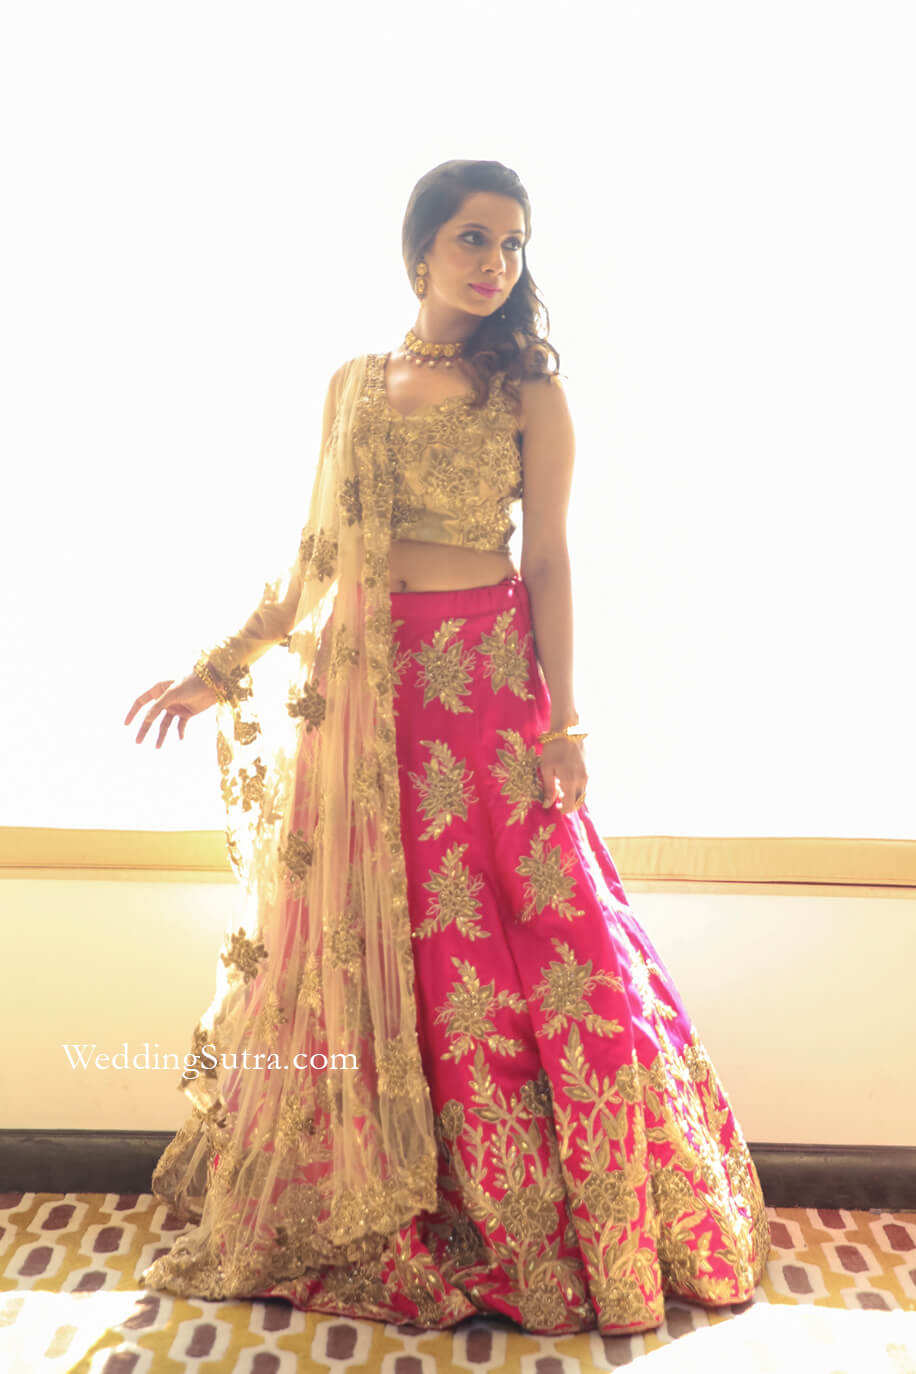 WeddingSutra on Location - Heeta Vithalani